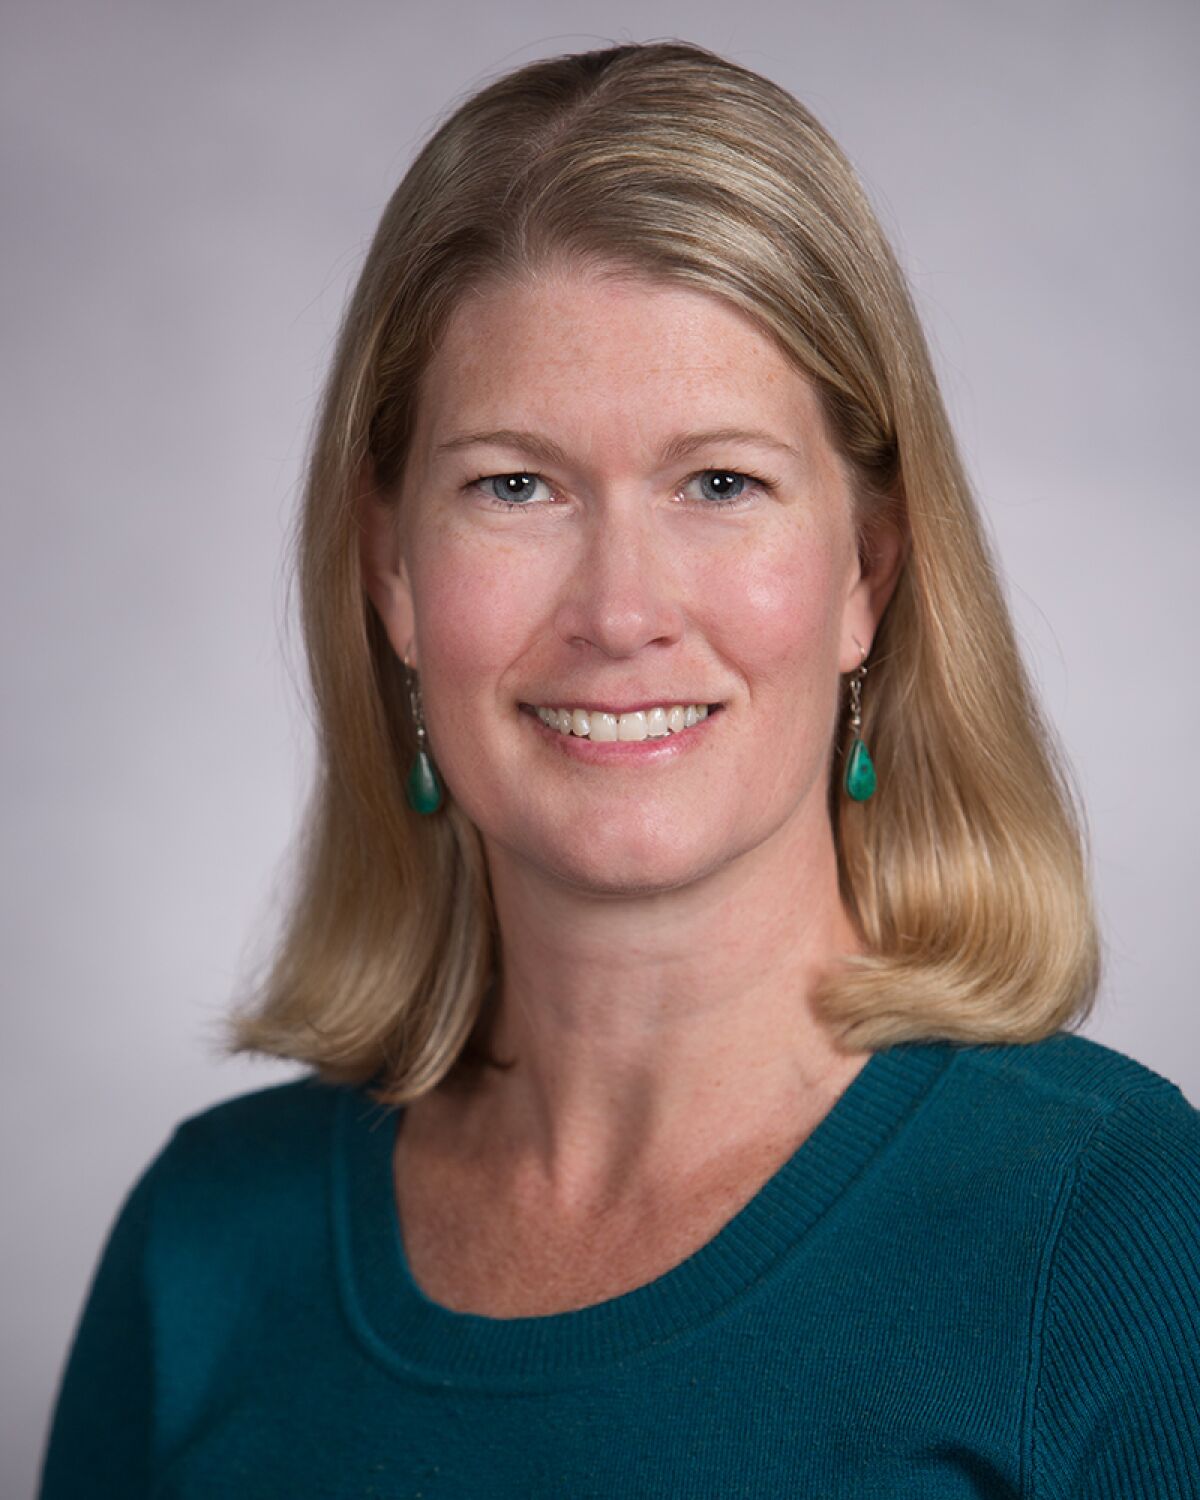 Dr. Leah Kern is a pediatrician at UC San Diego